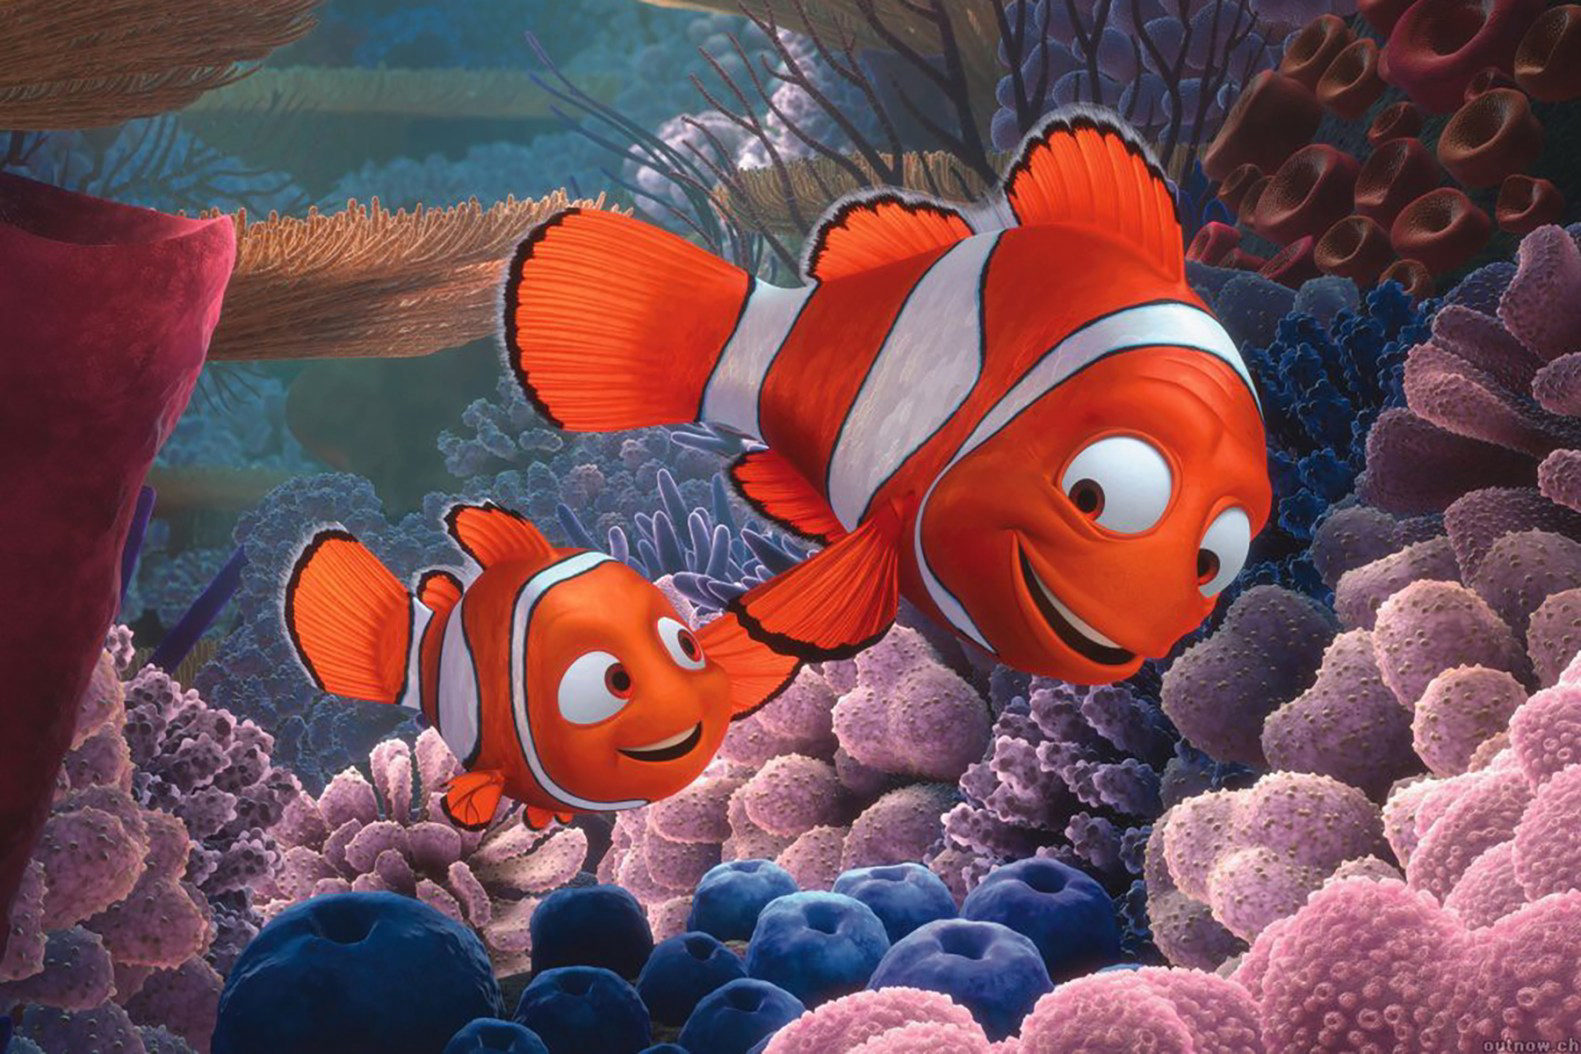 Banner Phim Đi Tìm Nemo (Finding Nemo)